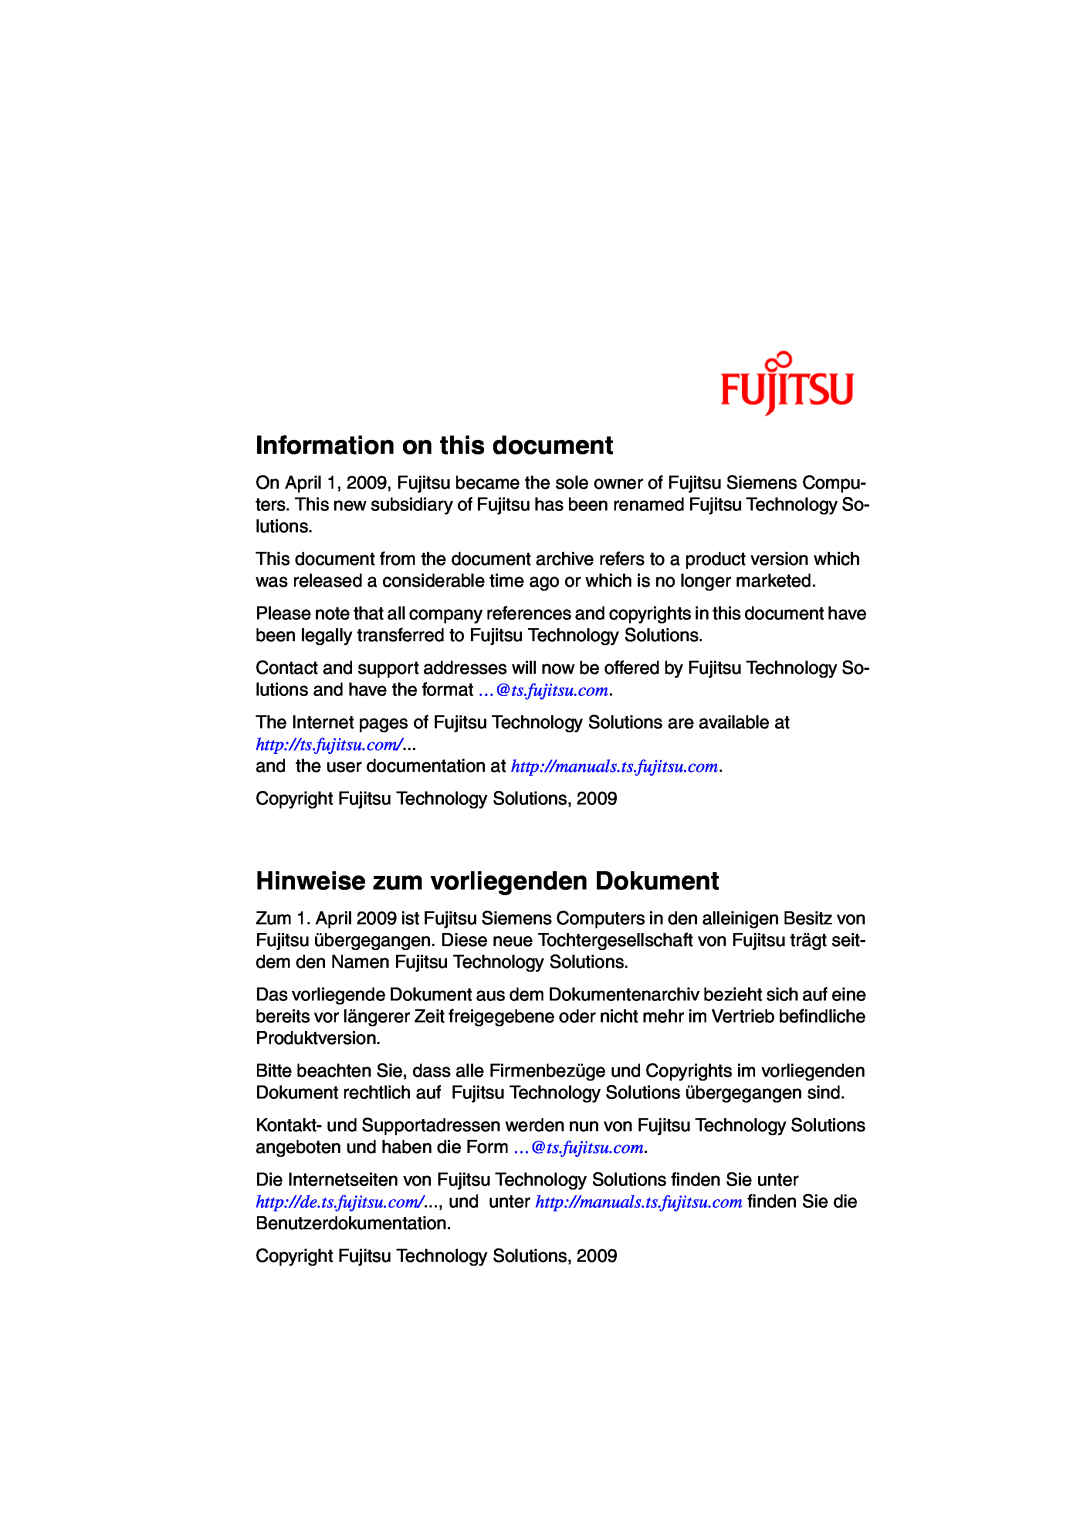 Fujitsu D1859 technical manual Information on this document, Hinweise zum vorliegenden Dokument, http//ts.fujitsu.com 